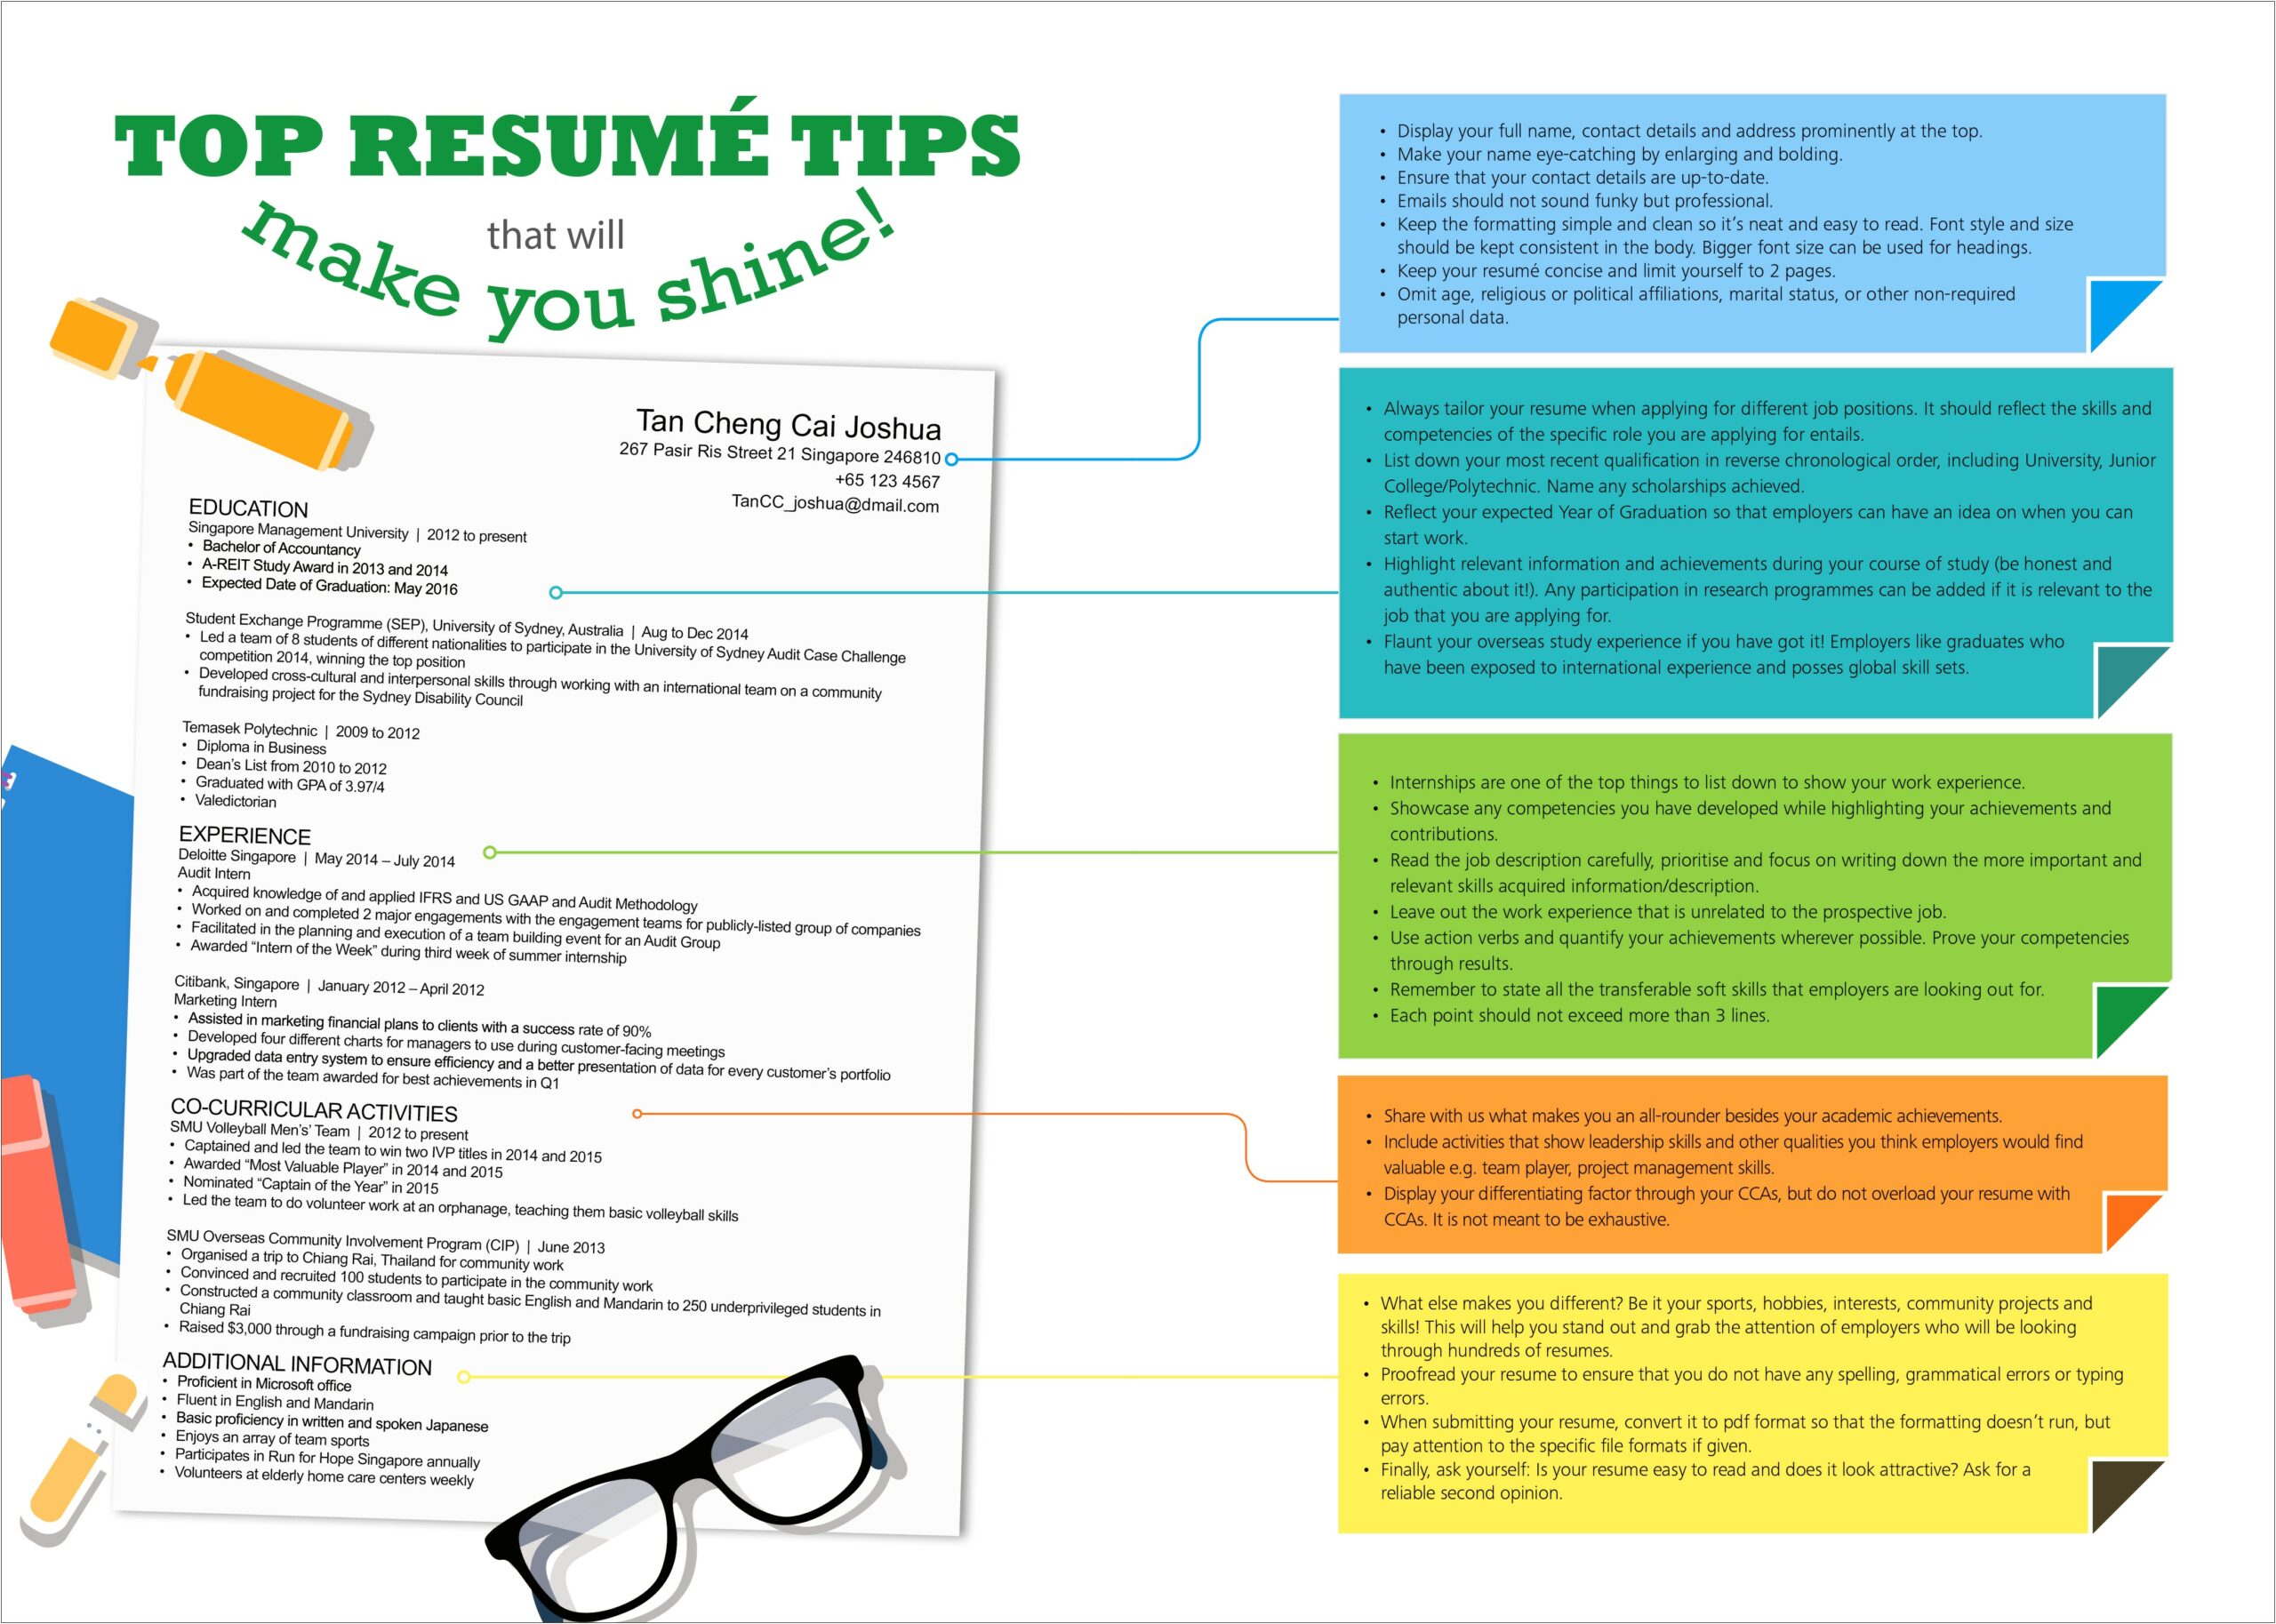 Do You Put Work Study On Resume